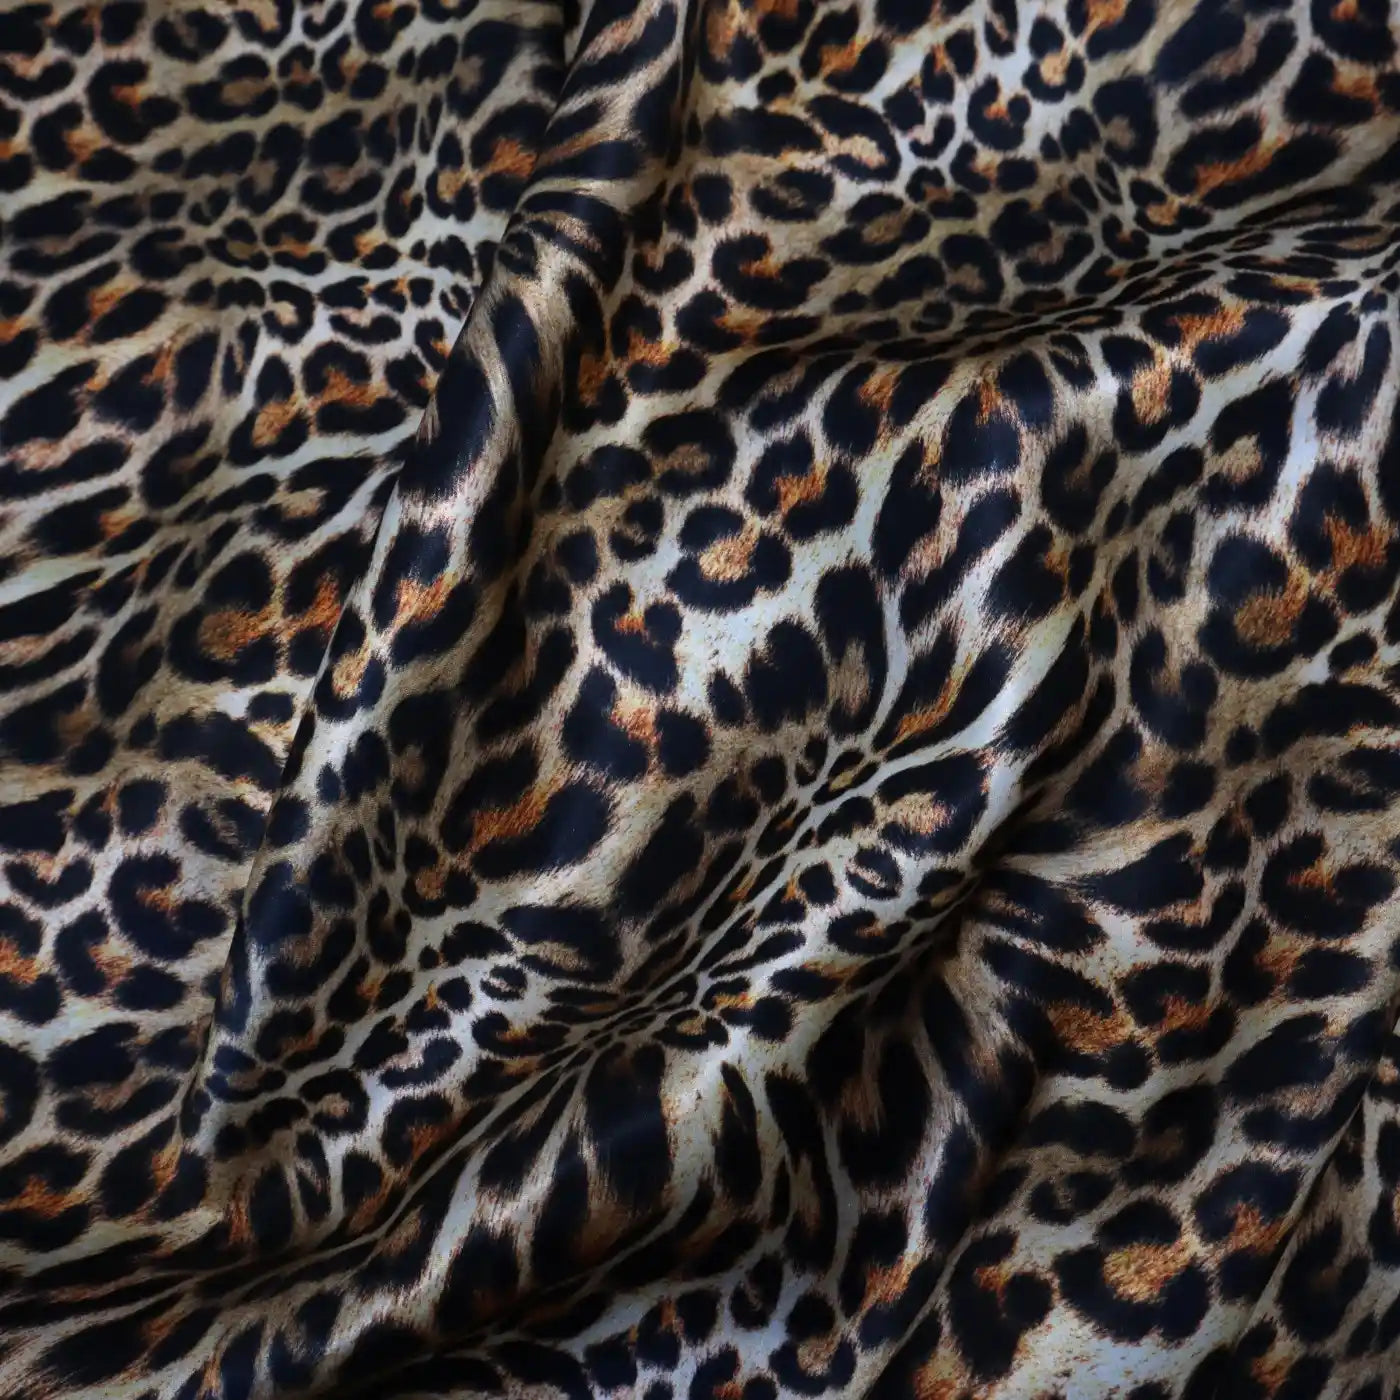 Leopard Silk Pillowcase 22 momme real silk UK Ireland